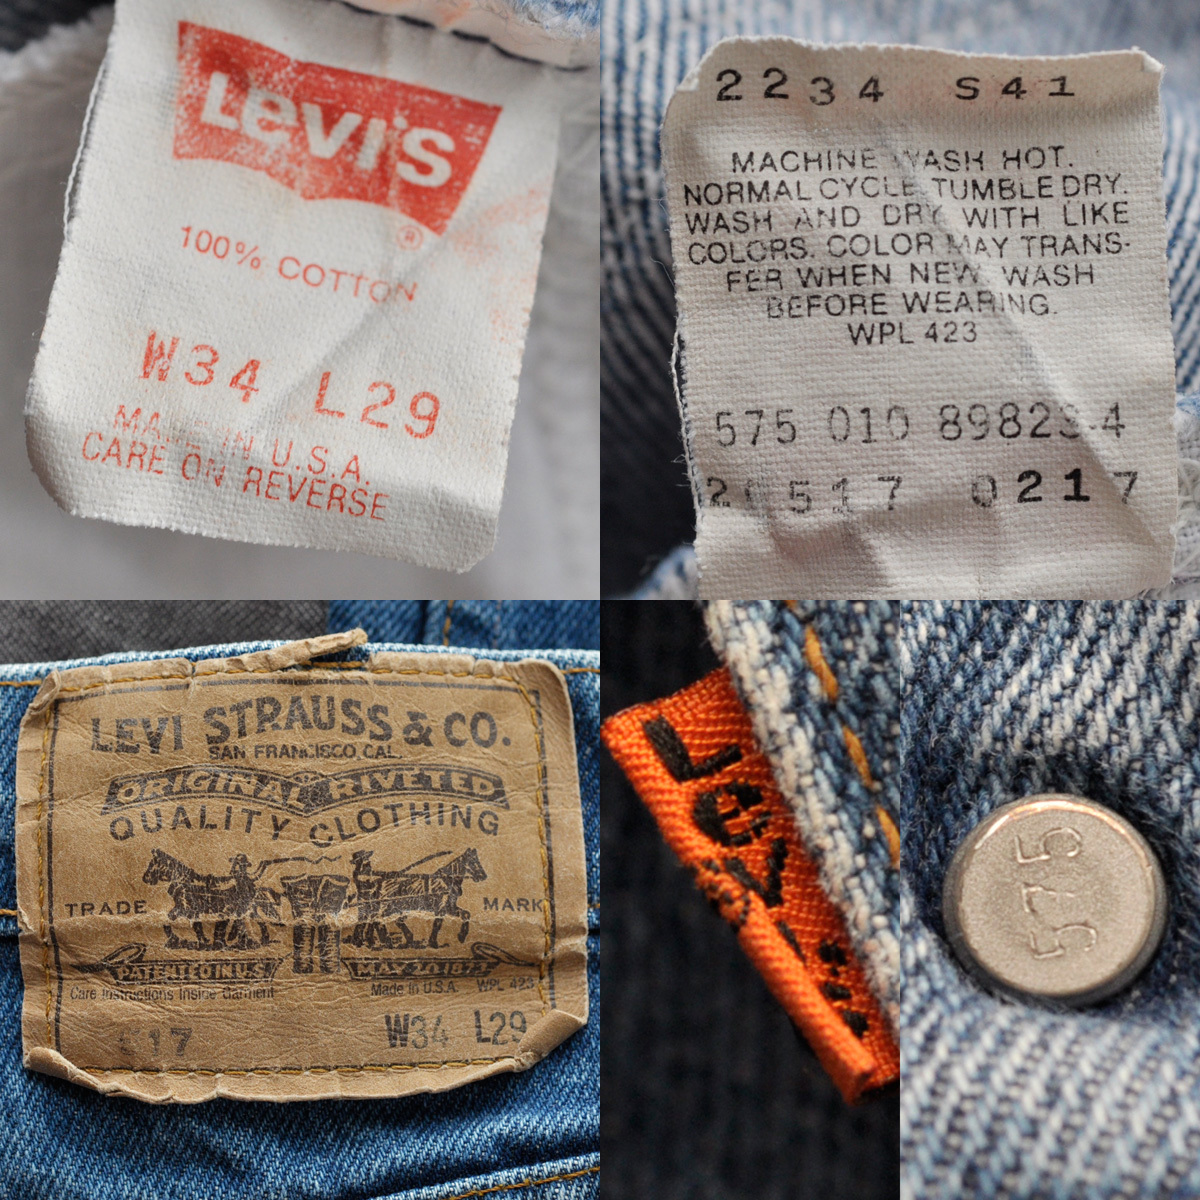 90s Levis 517 Levi's Denim boots cut pants jeans W34 W82cm USA made orange tab/ Vintage 00s 70shipi- flair 